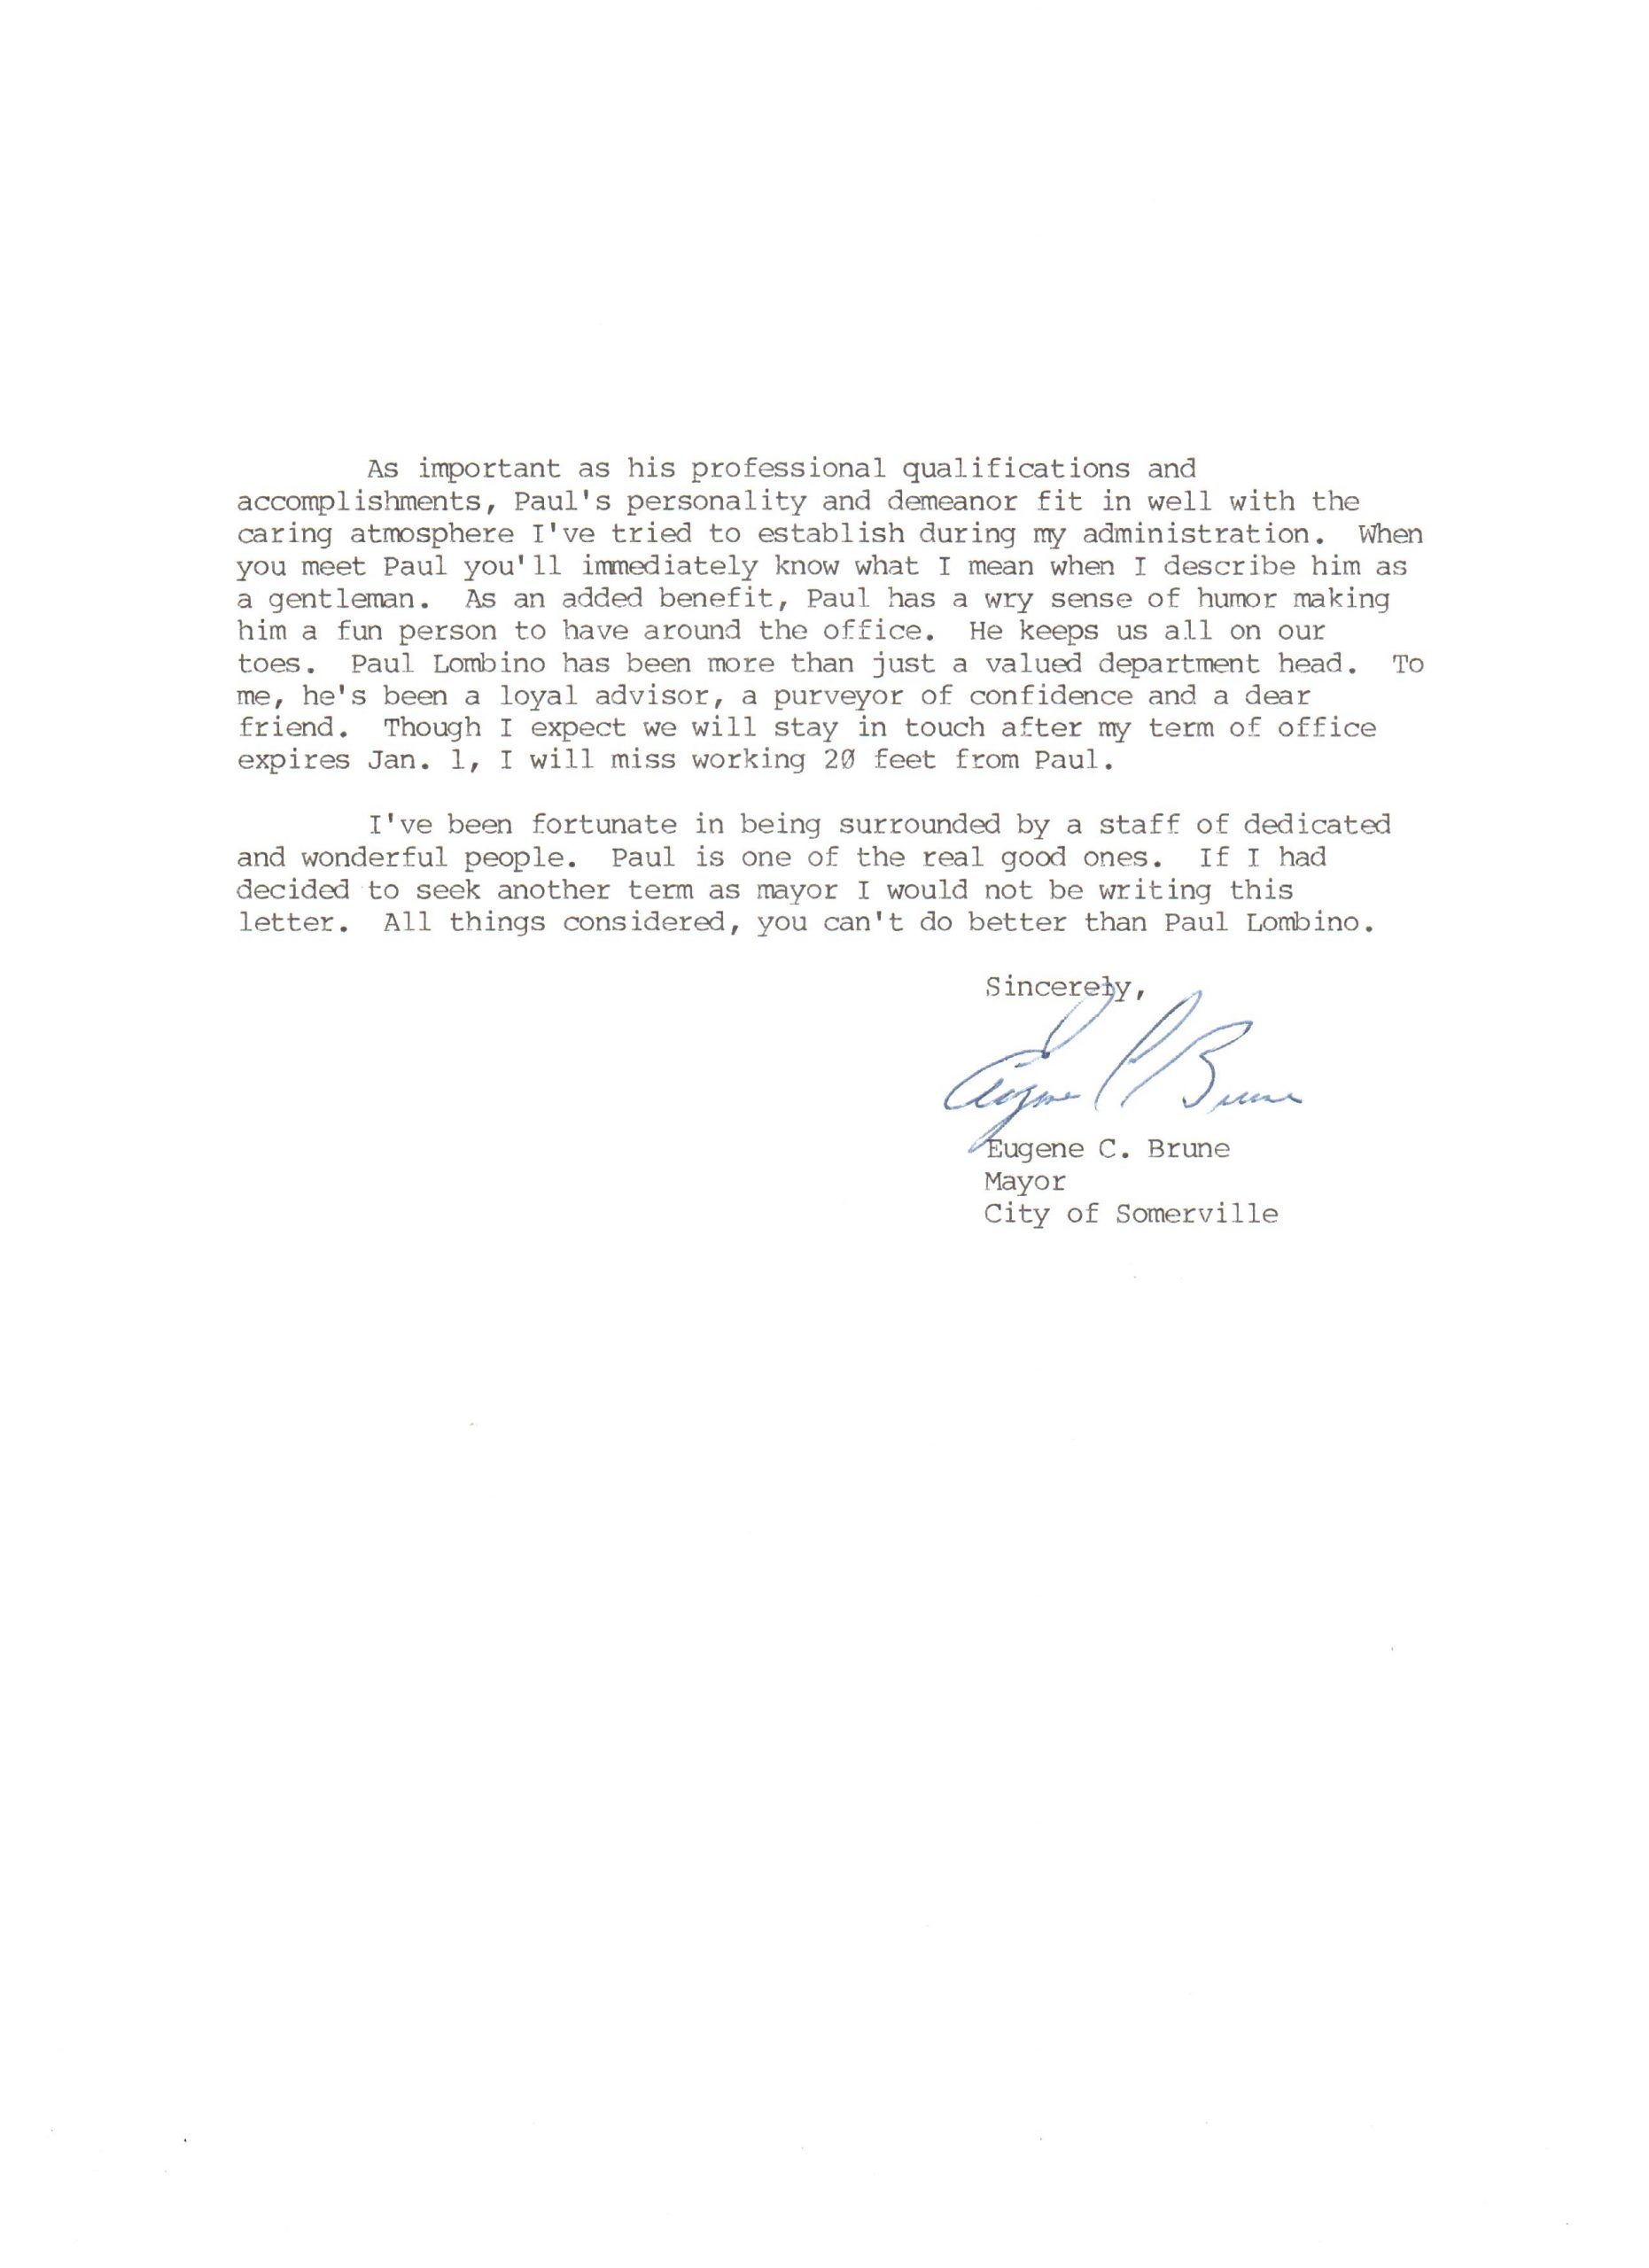 Letter Of Recommendation From Mayor Eugene C Brune inside measurements 2552 X 3510